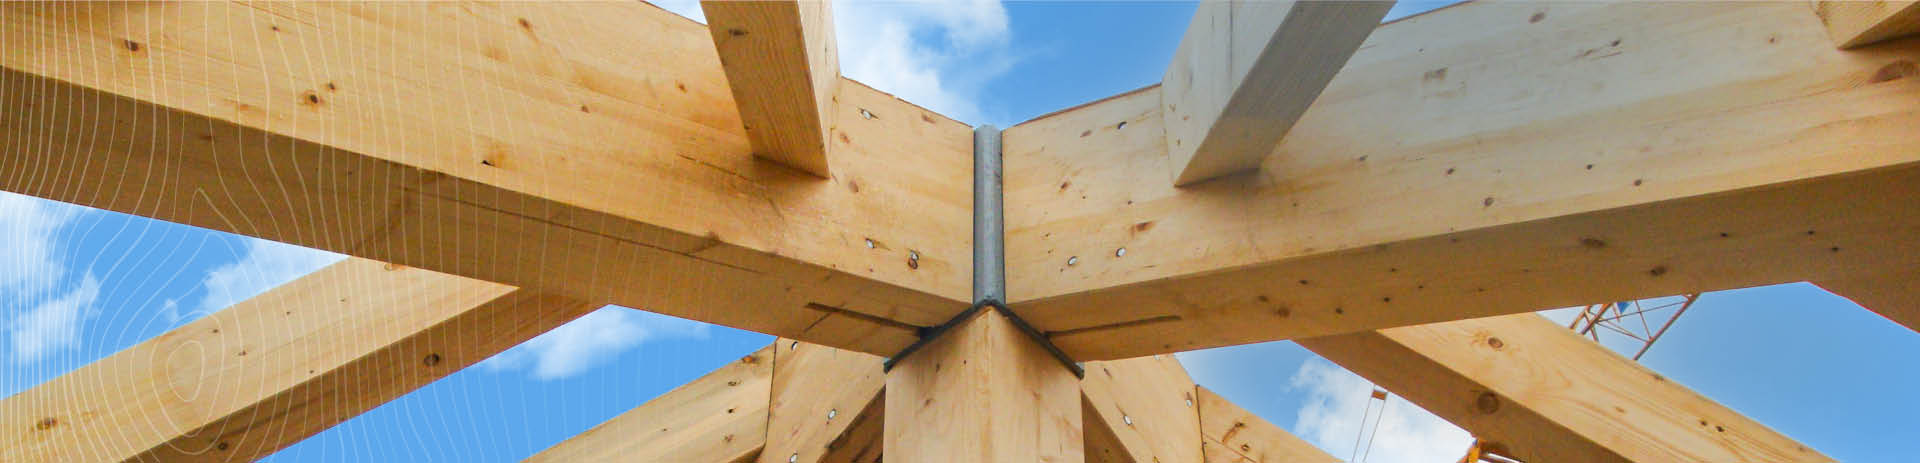 Schmickler Holzbau bietet hochwertige Holzkonstruktionen